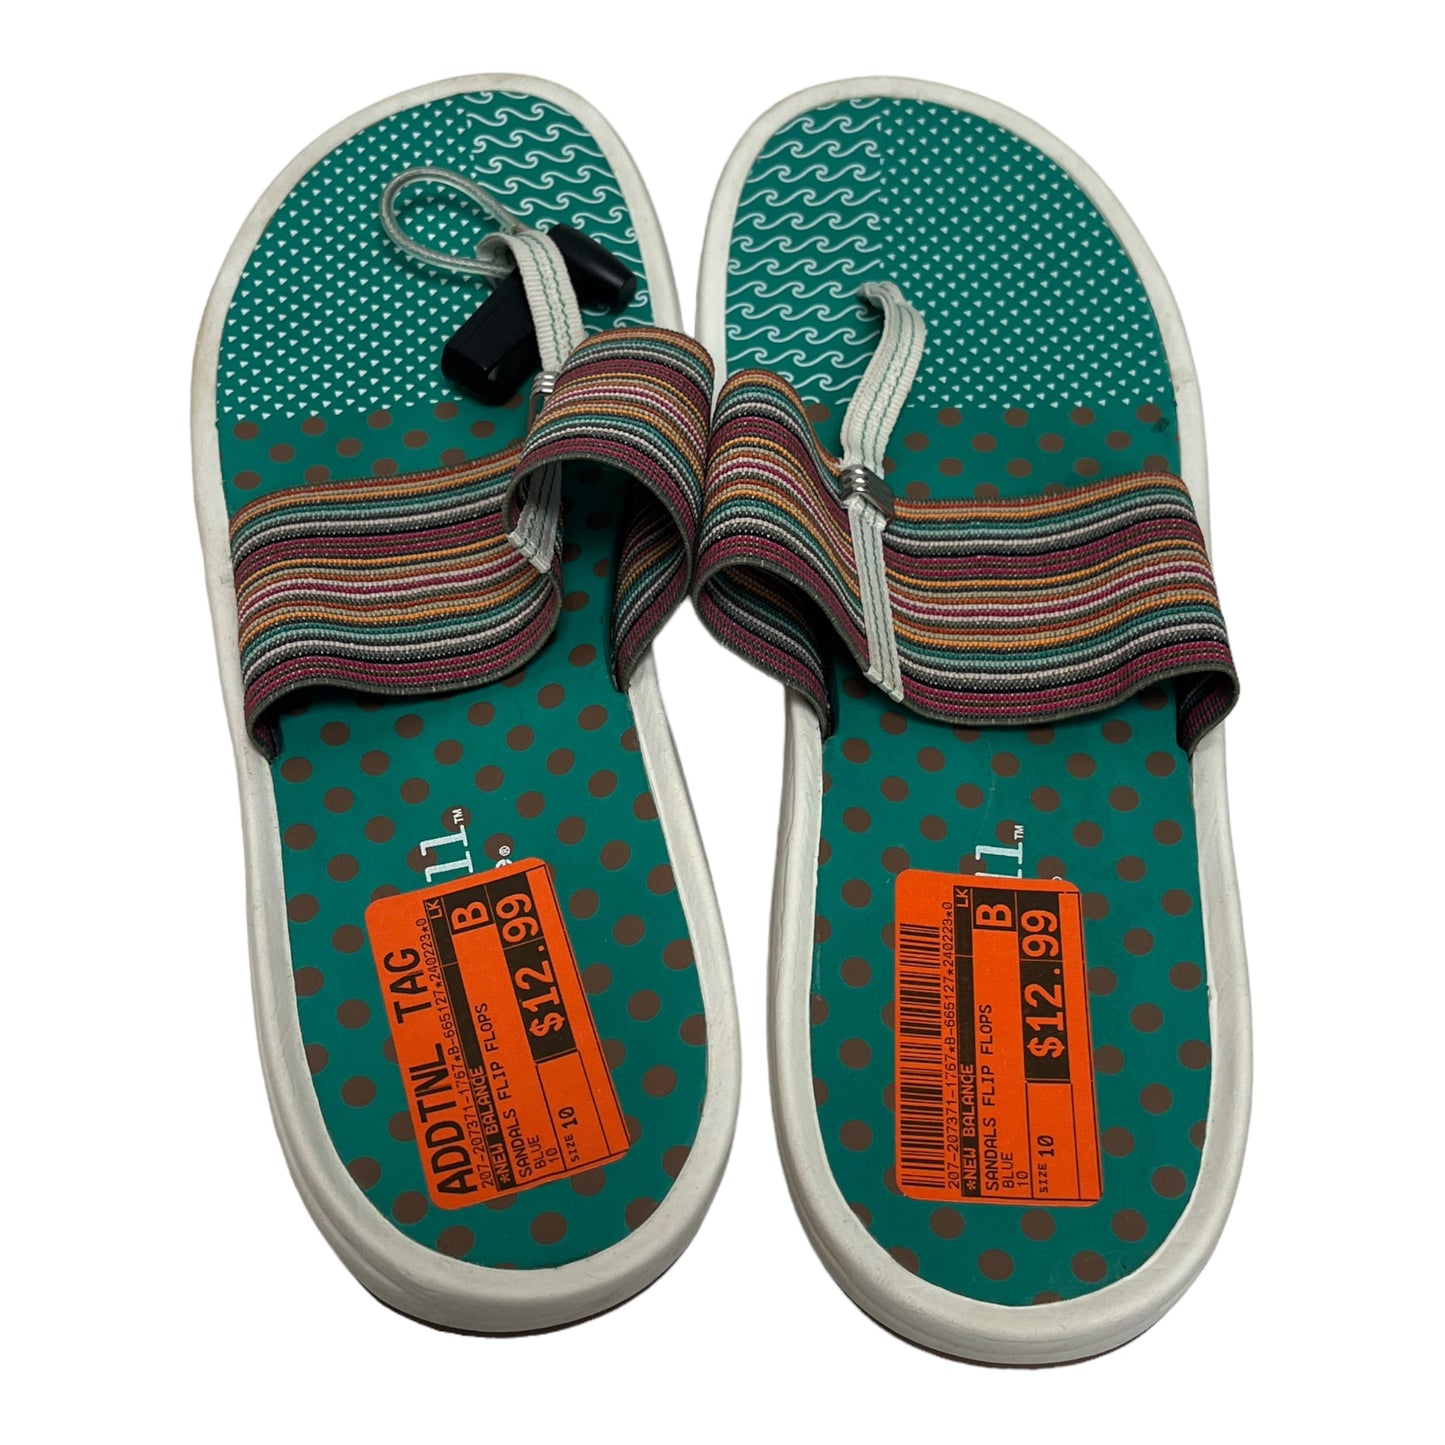 Sandals Flip Flops By New Balance  Size: 10